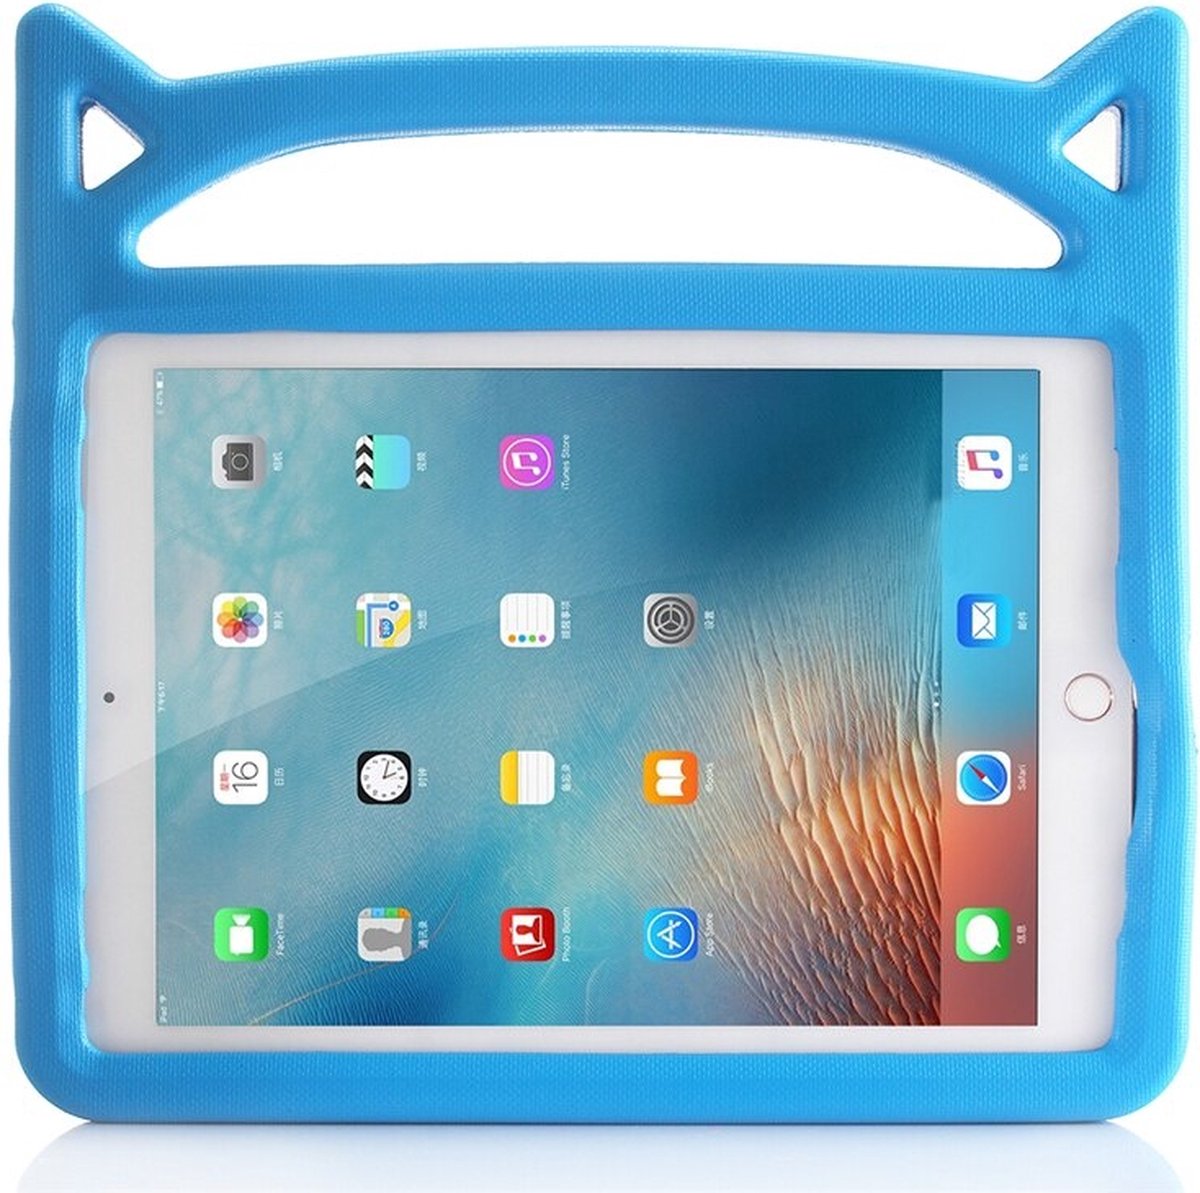 GREEN ON - Kinder Hoes - iPad 4/5(2017/2018) en iPad Air 1/2(2013/2014) - Duurzame Valbescherming - Blauw - 9.7 inch